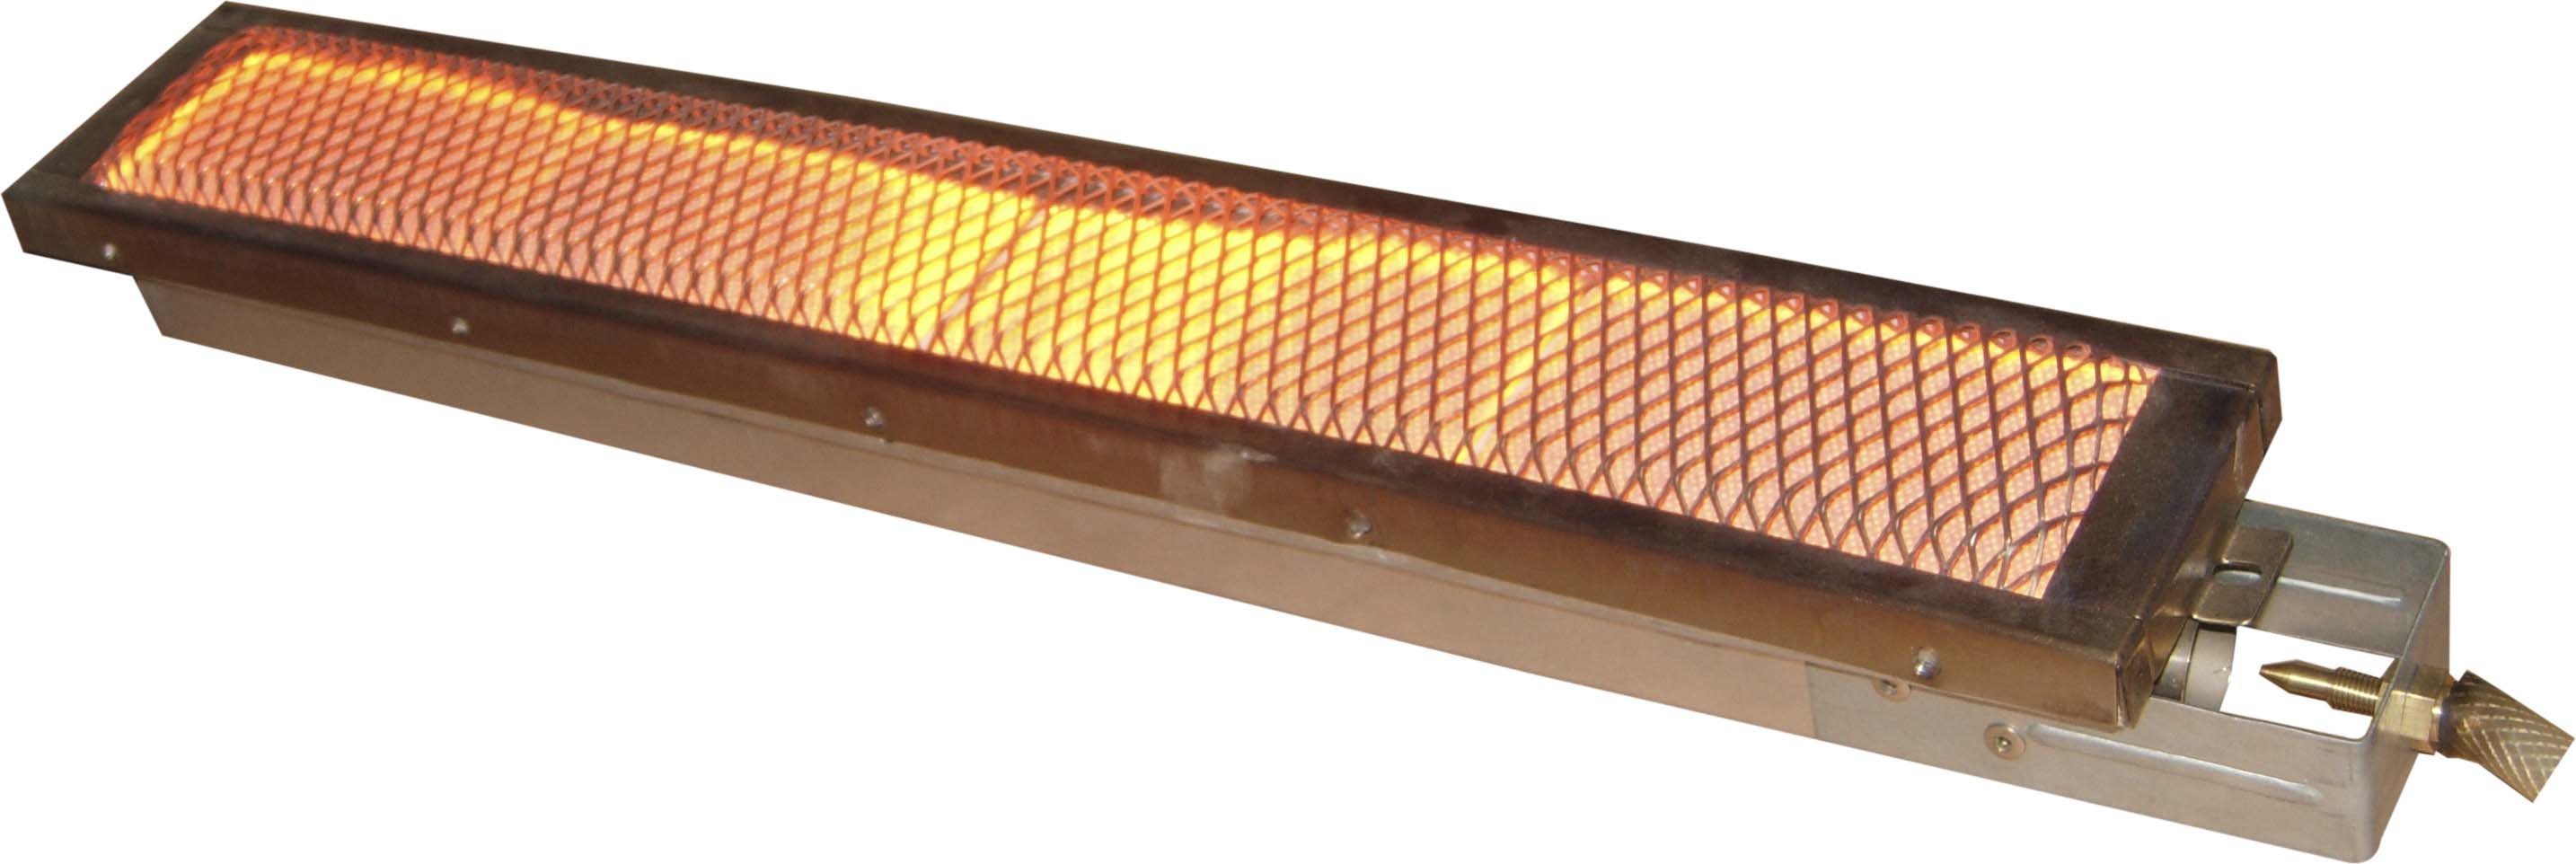 Gas Infrared bbq grill burner (HD538)